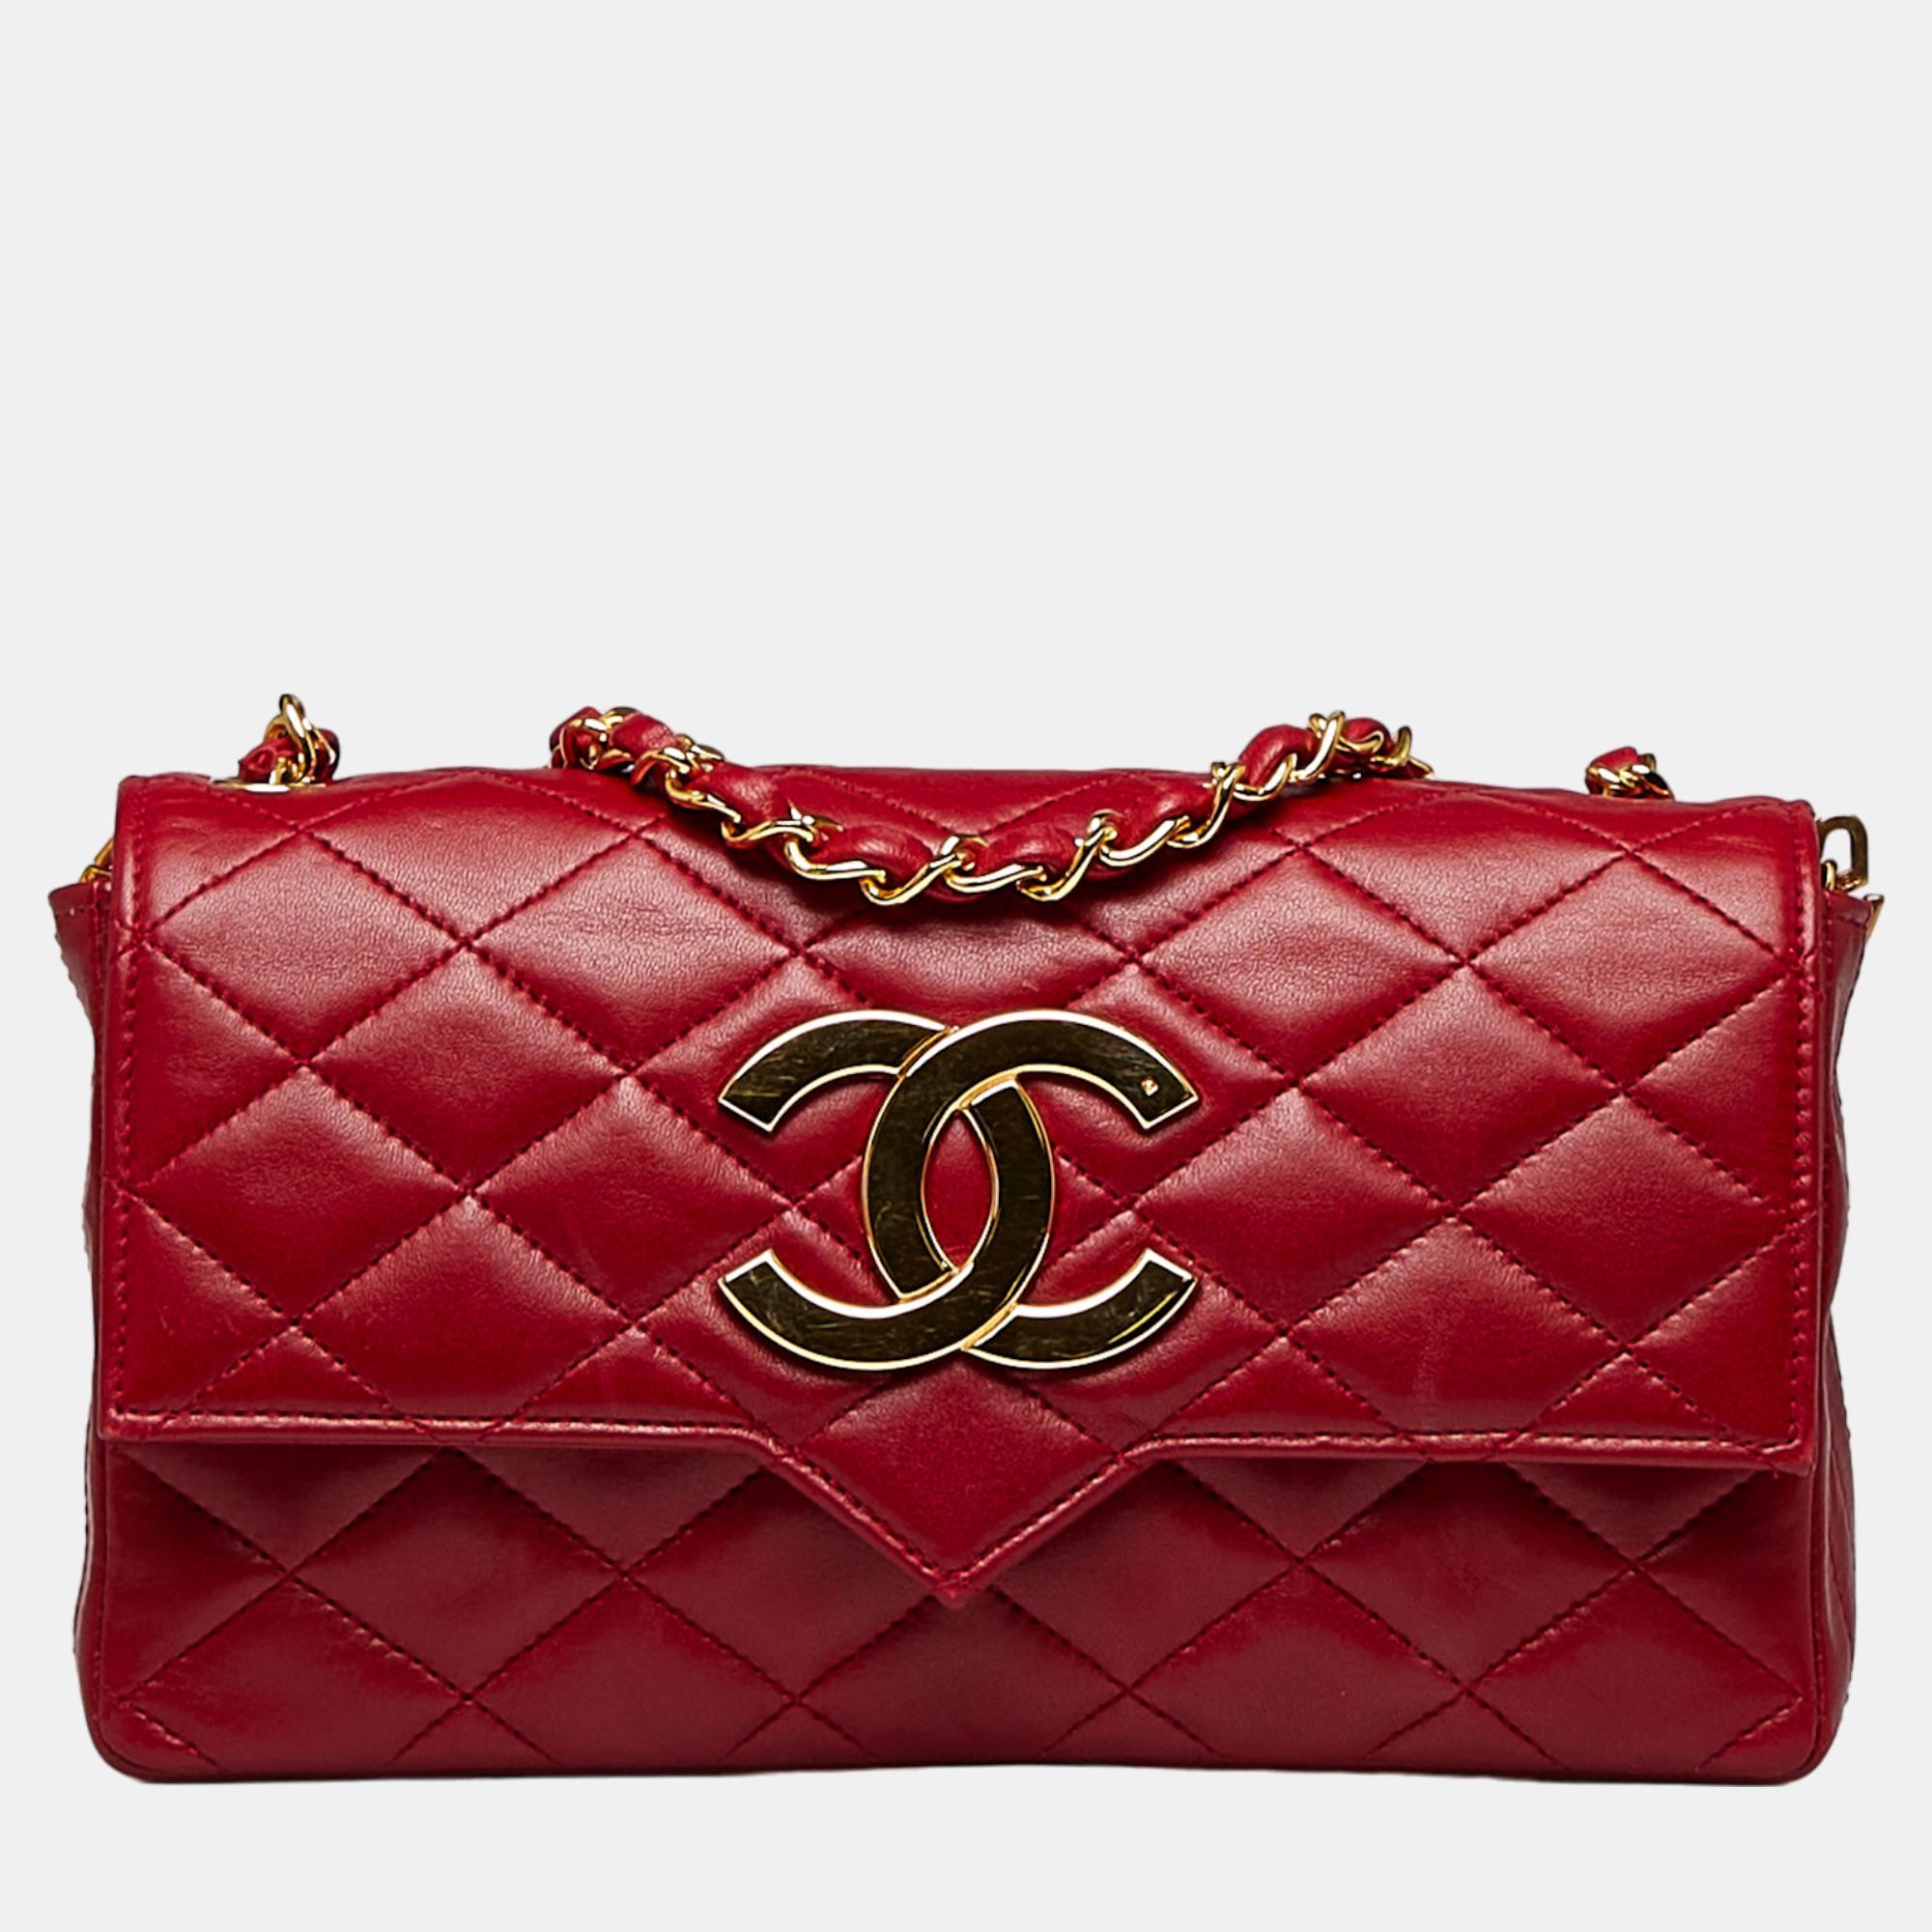 Chanel red cc crossbody bag